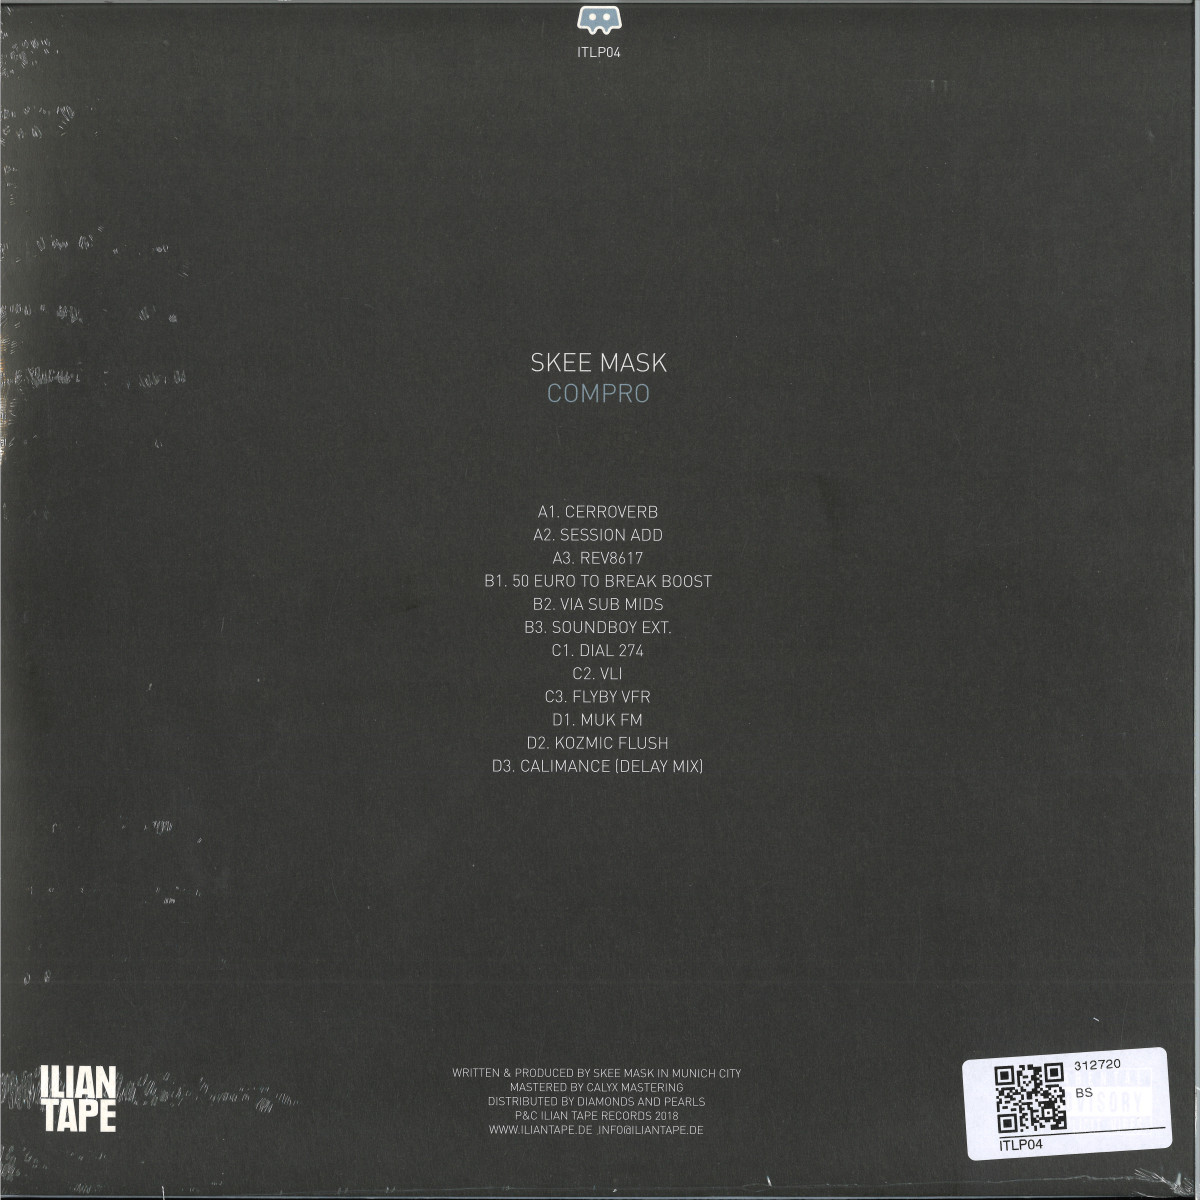 Skee Mask - Compro LP 2x12" / Ilian Tape ITLP04 - Vinyl